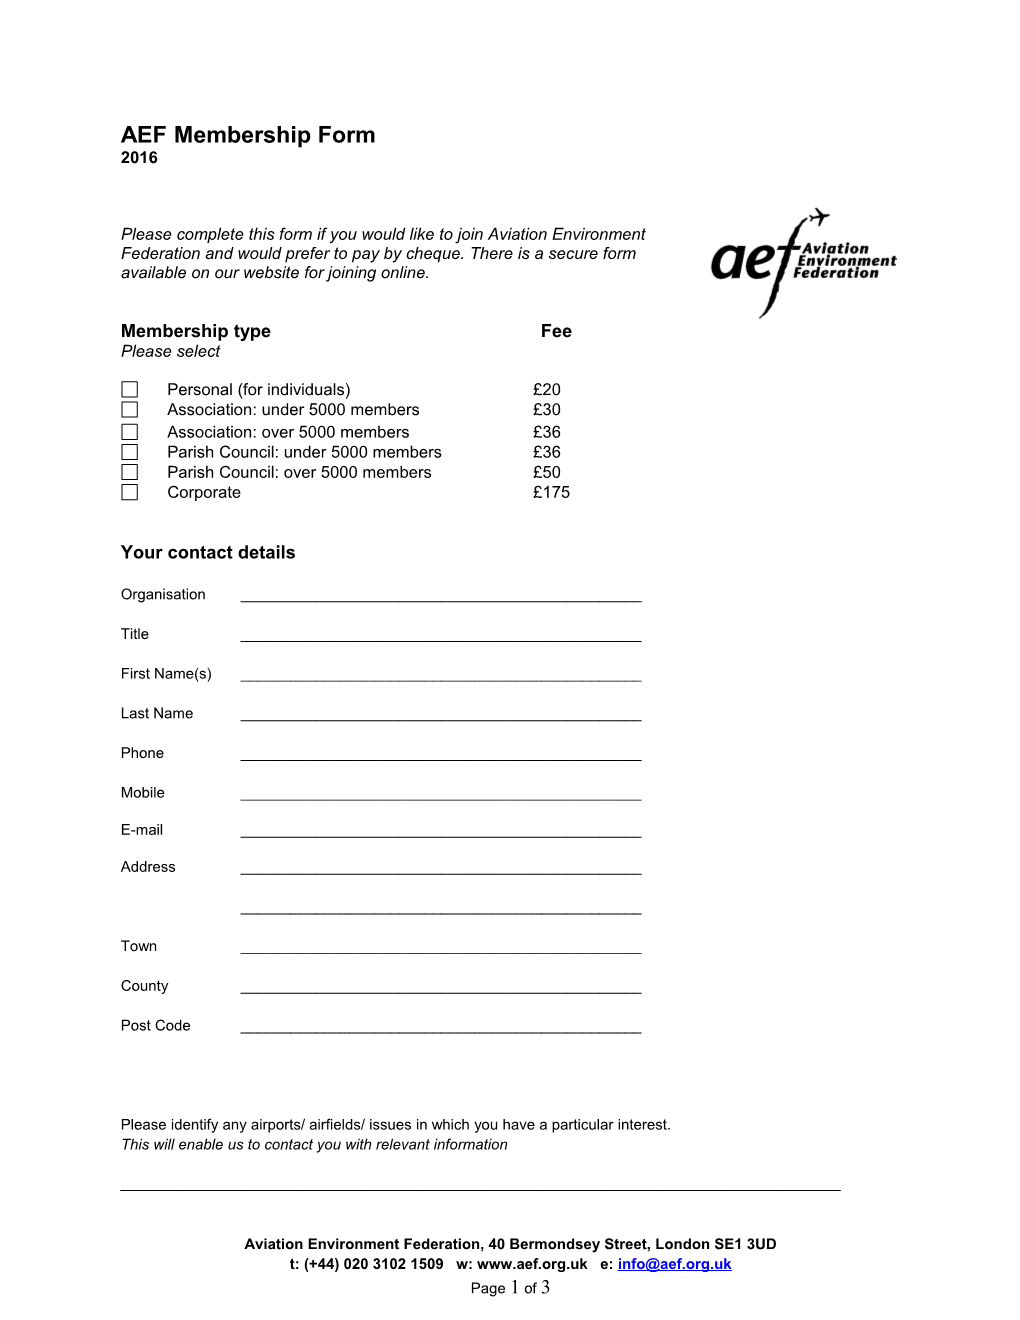 AEF Personal Membership Form